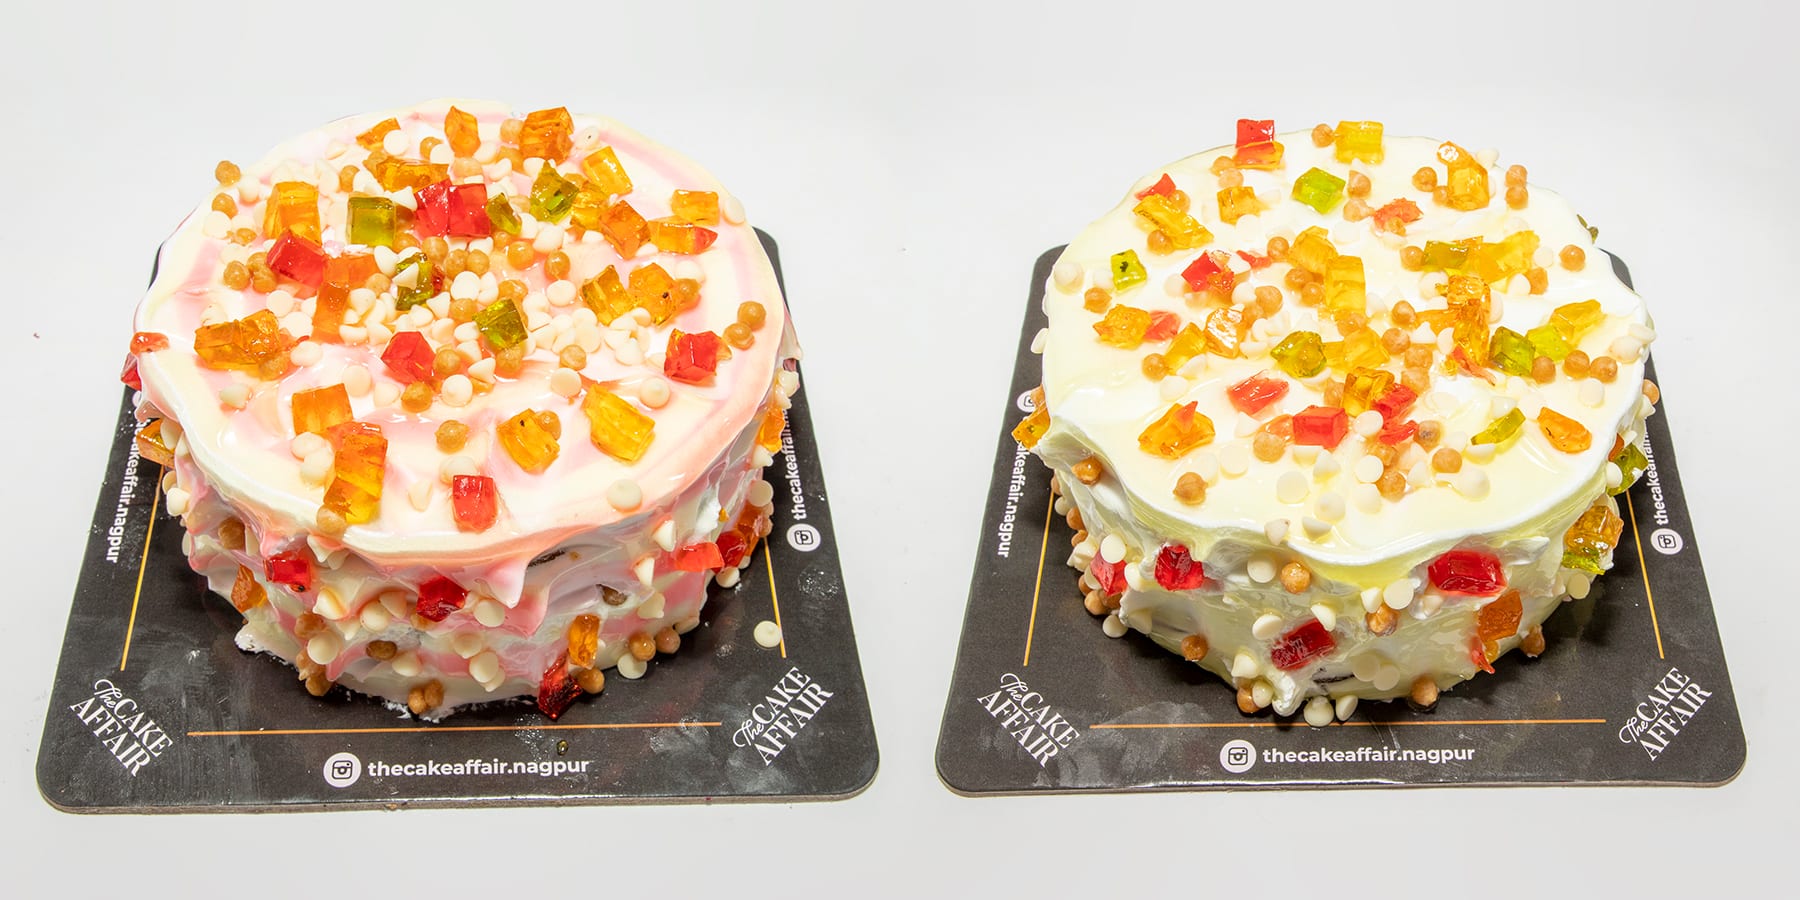 Sprinkles - The Cake Affair – Restaurant in Madhya Pradesh, reviews and  menu – Nicelocal